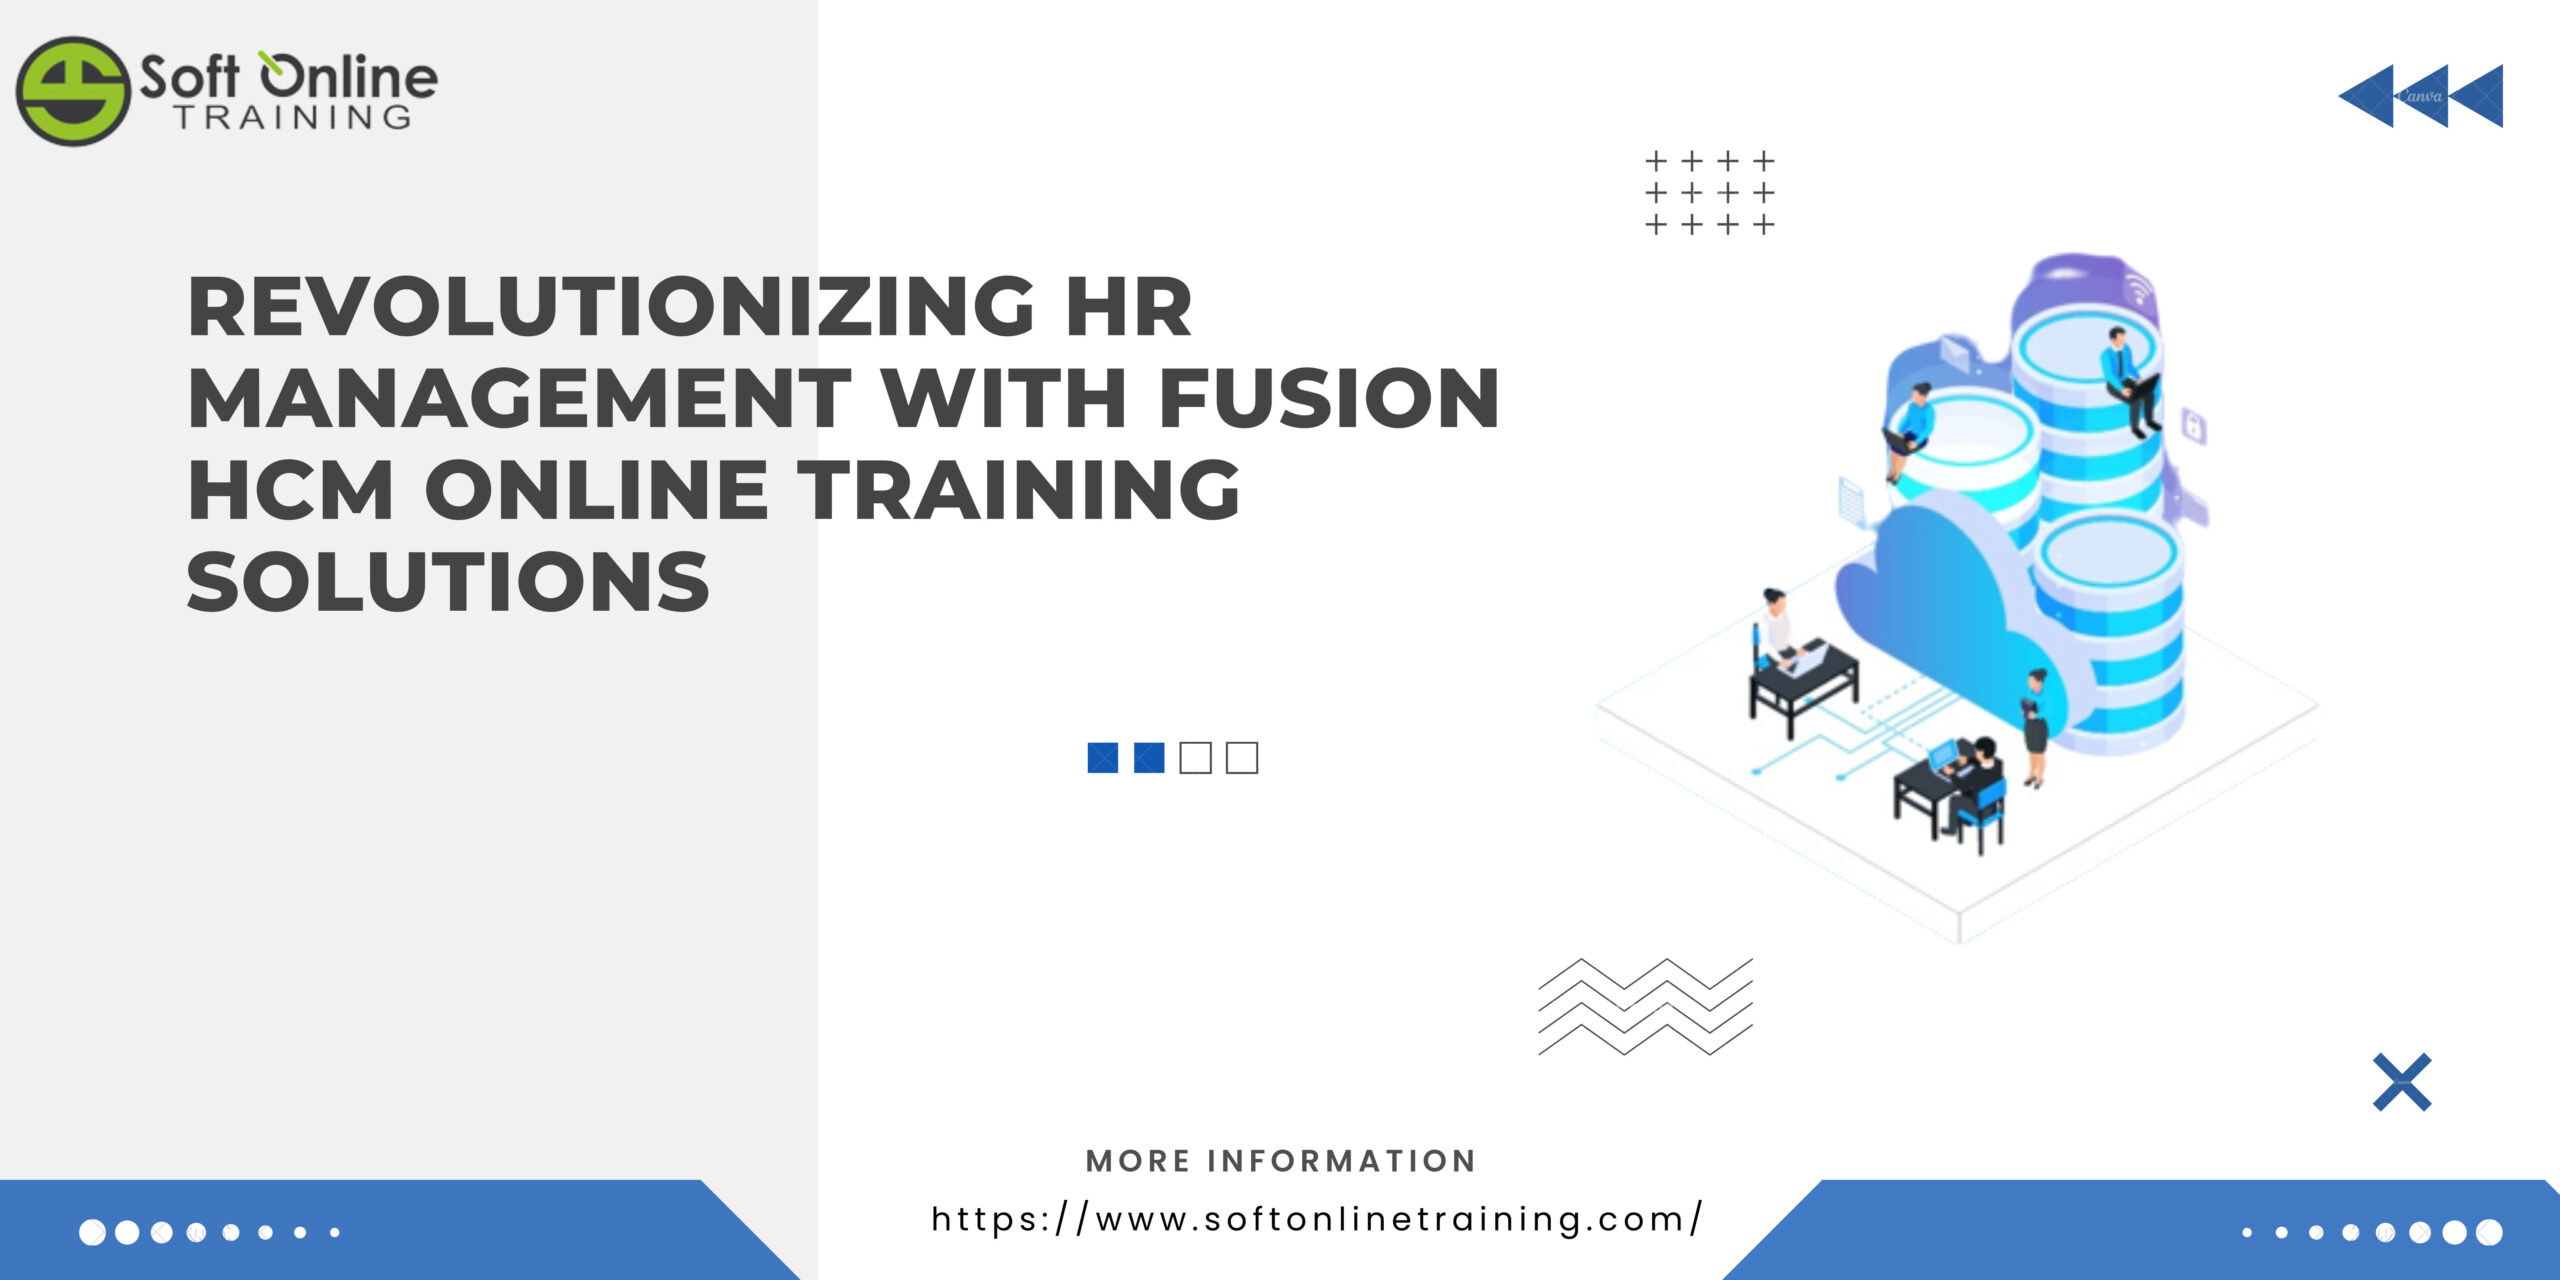 Fusion HCM Online Training